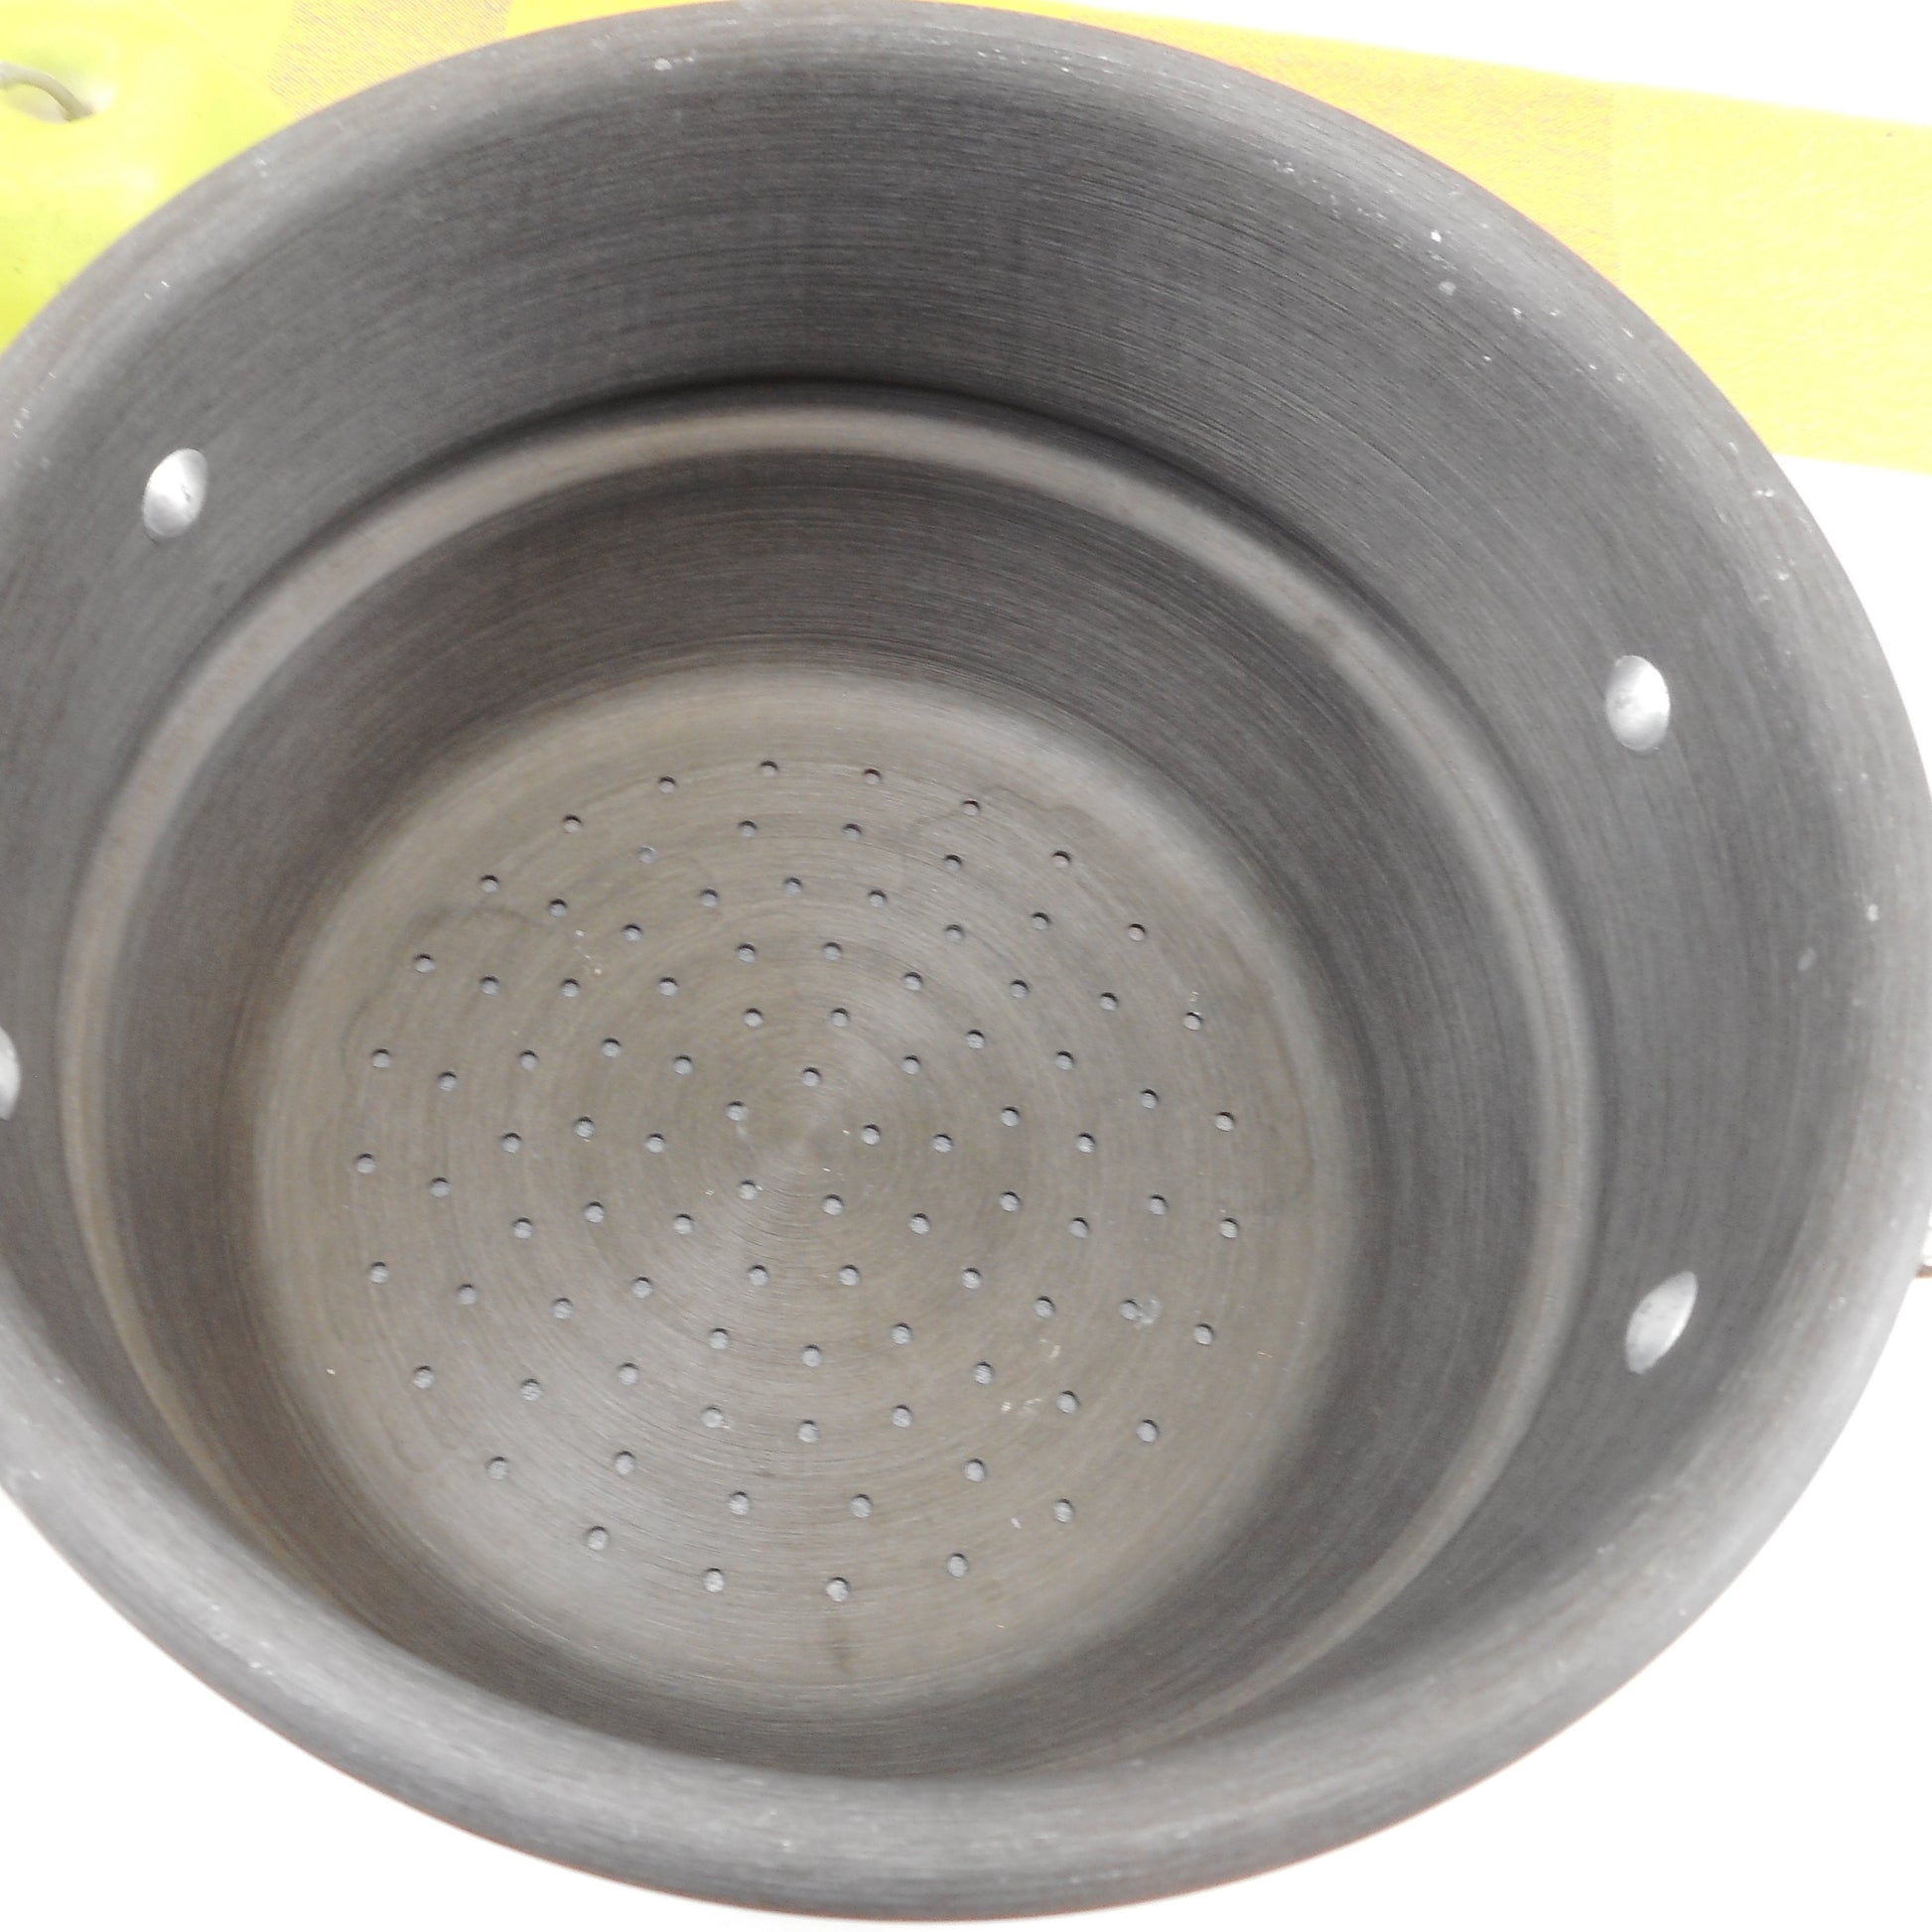 Commercial Cookware Toledo Calphalon - 3 Quart Anodized Aluminum Steamer Insert Perforated